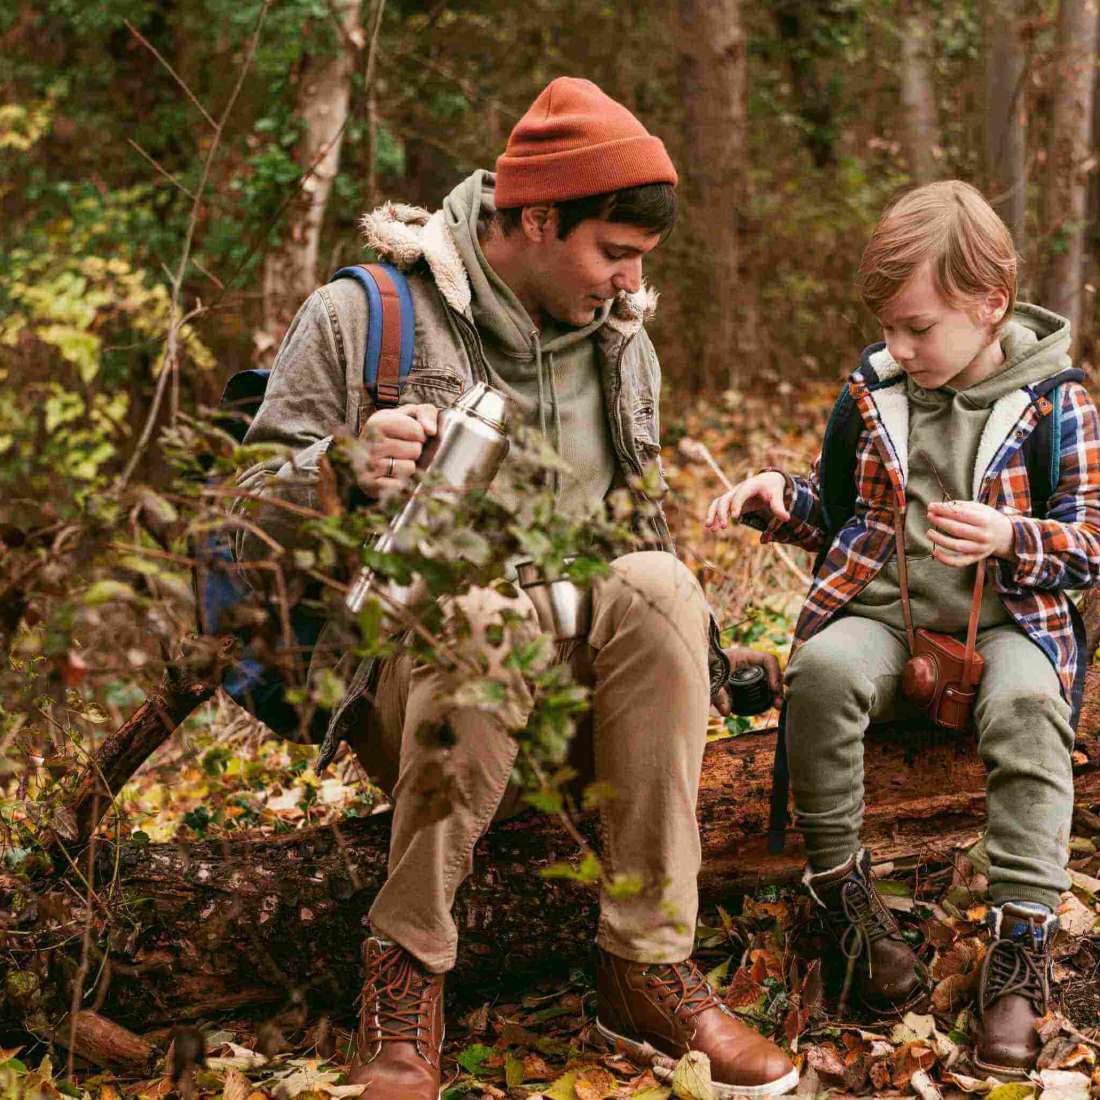 man and kid's hunting trip - Image by Freepik